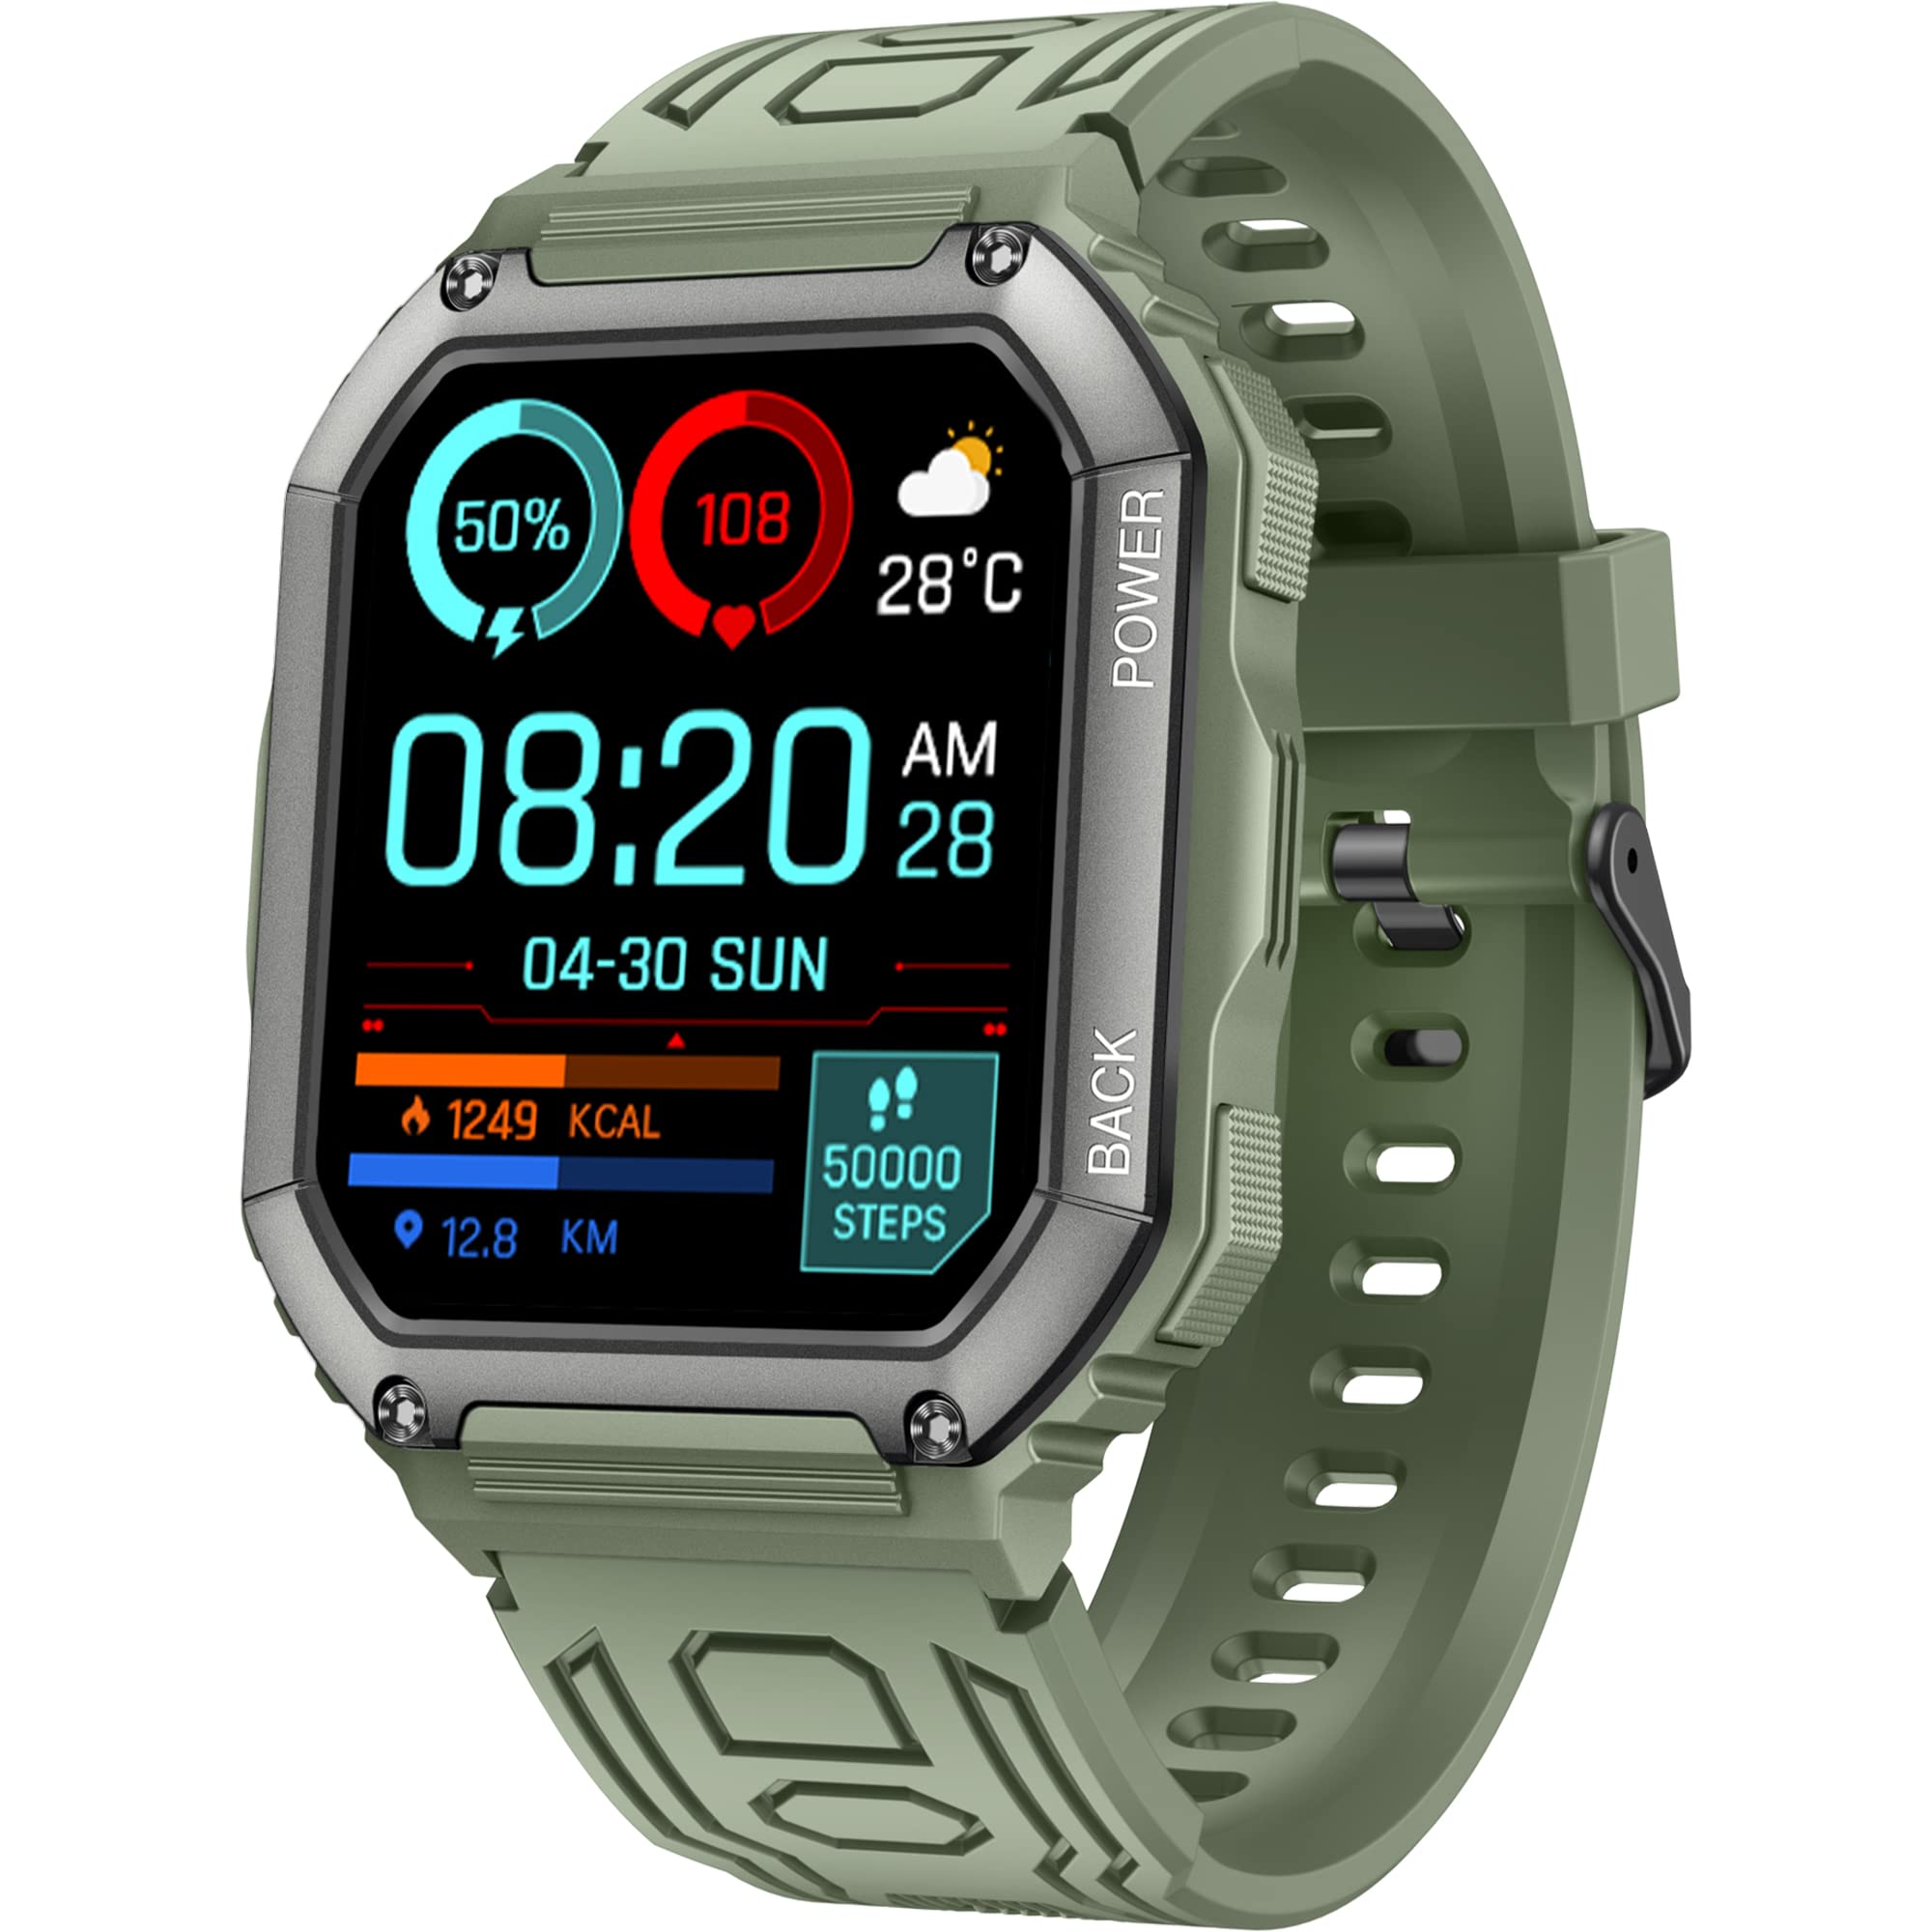 Smart Watches Bluetooth Call Men Sports Fitness, 1.8